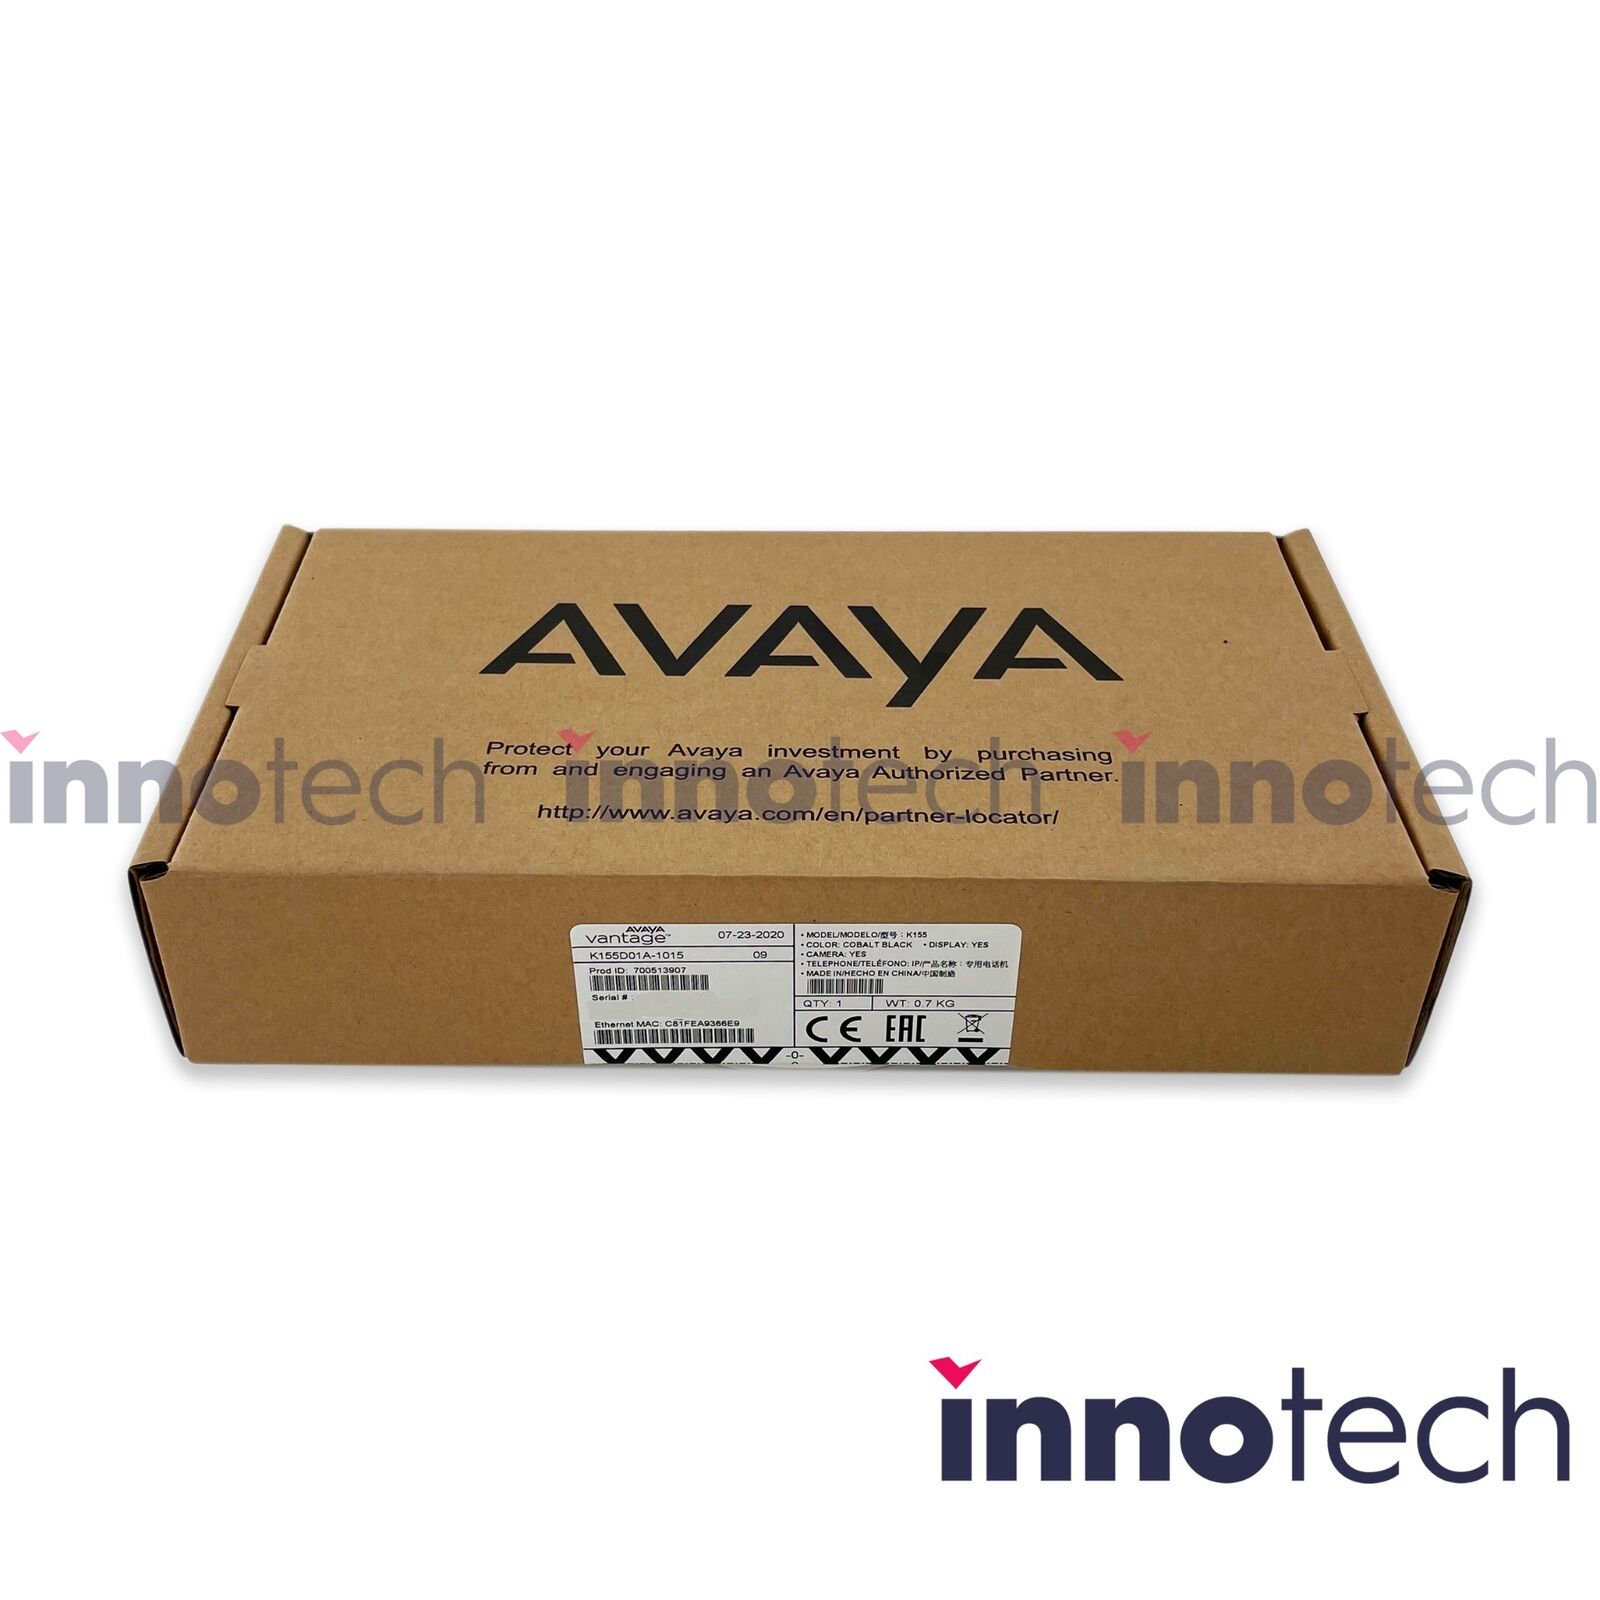 Avaya Vantage K155 Multimedia Device (700513907) New Sealed